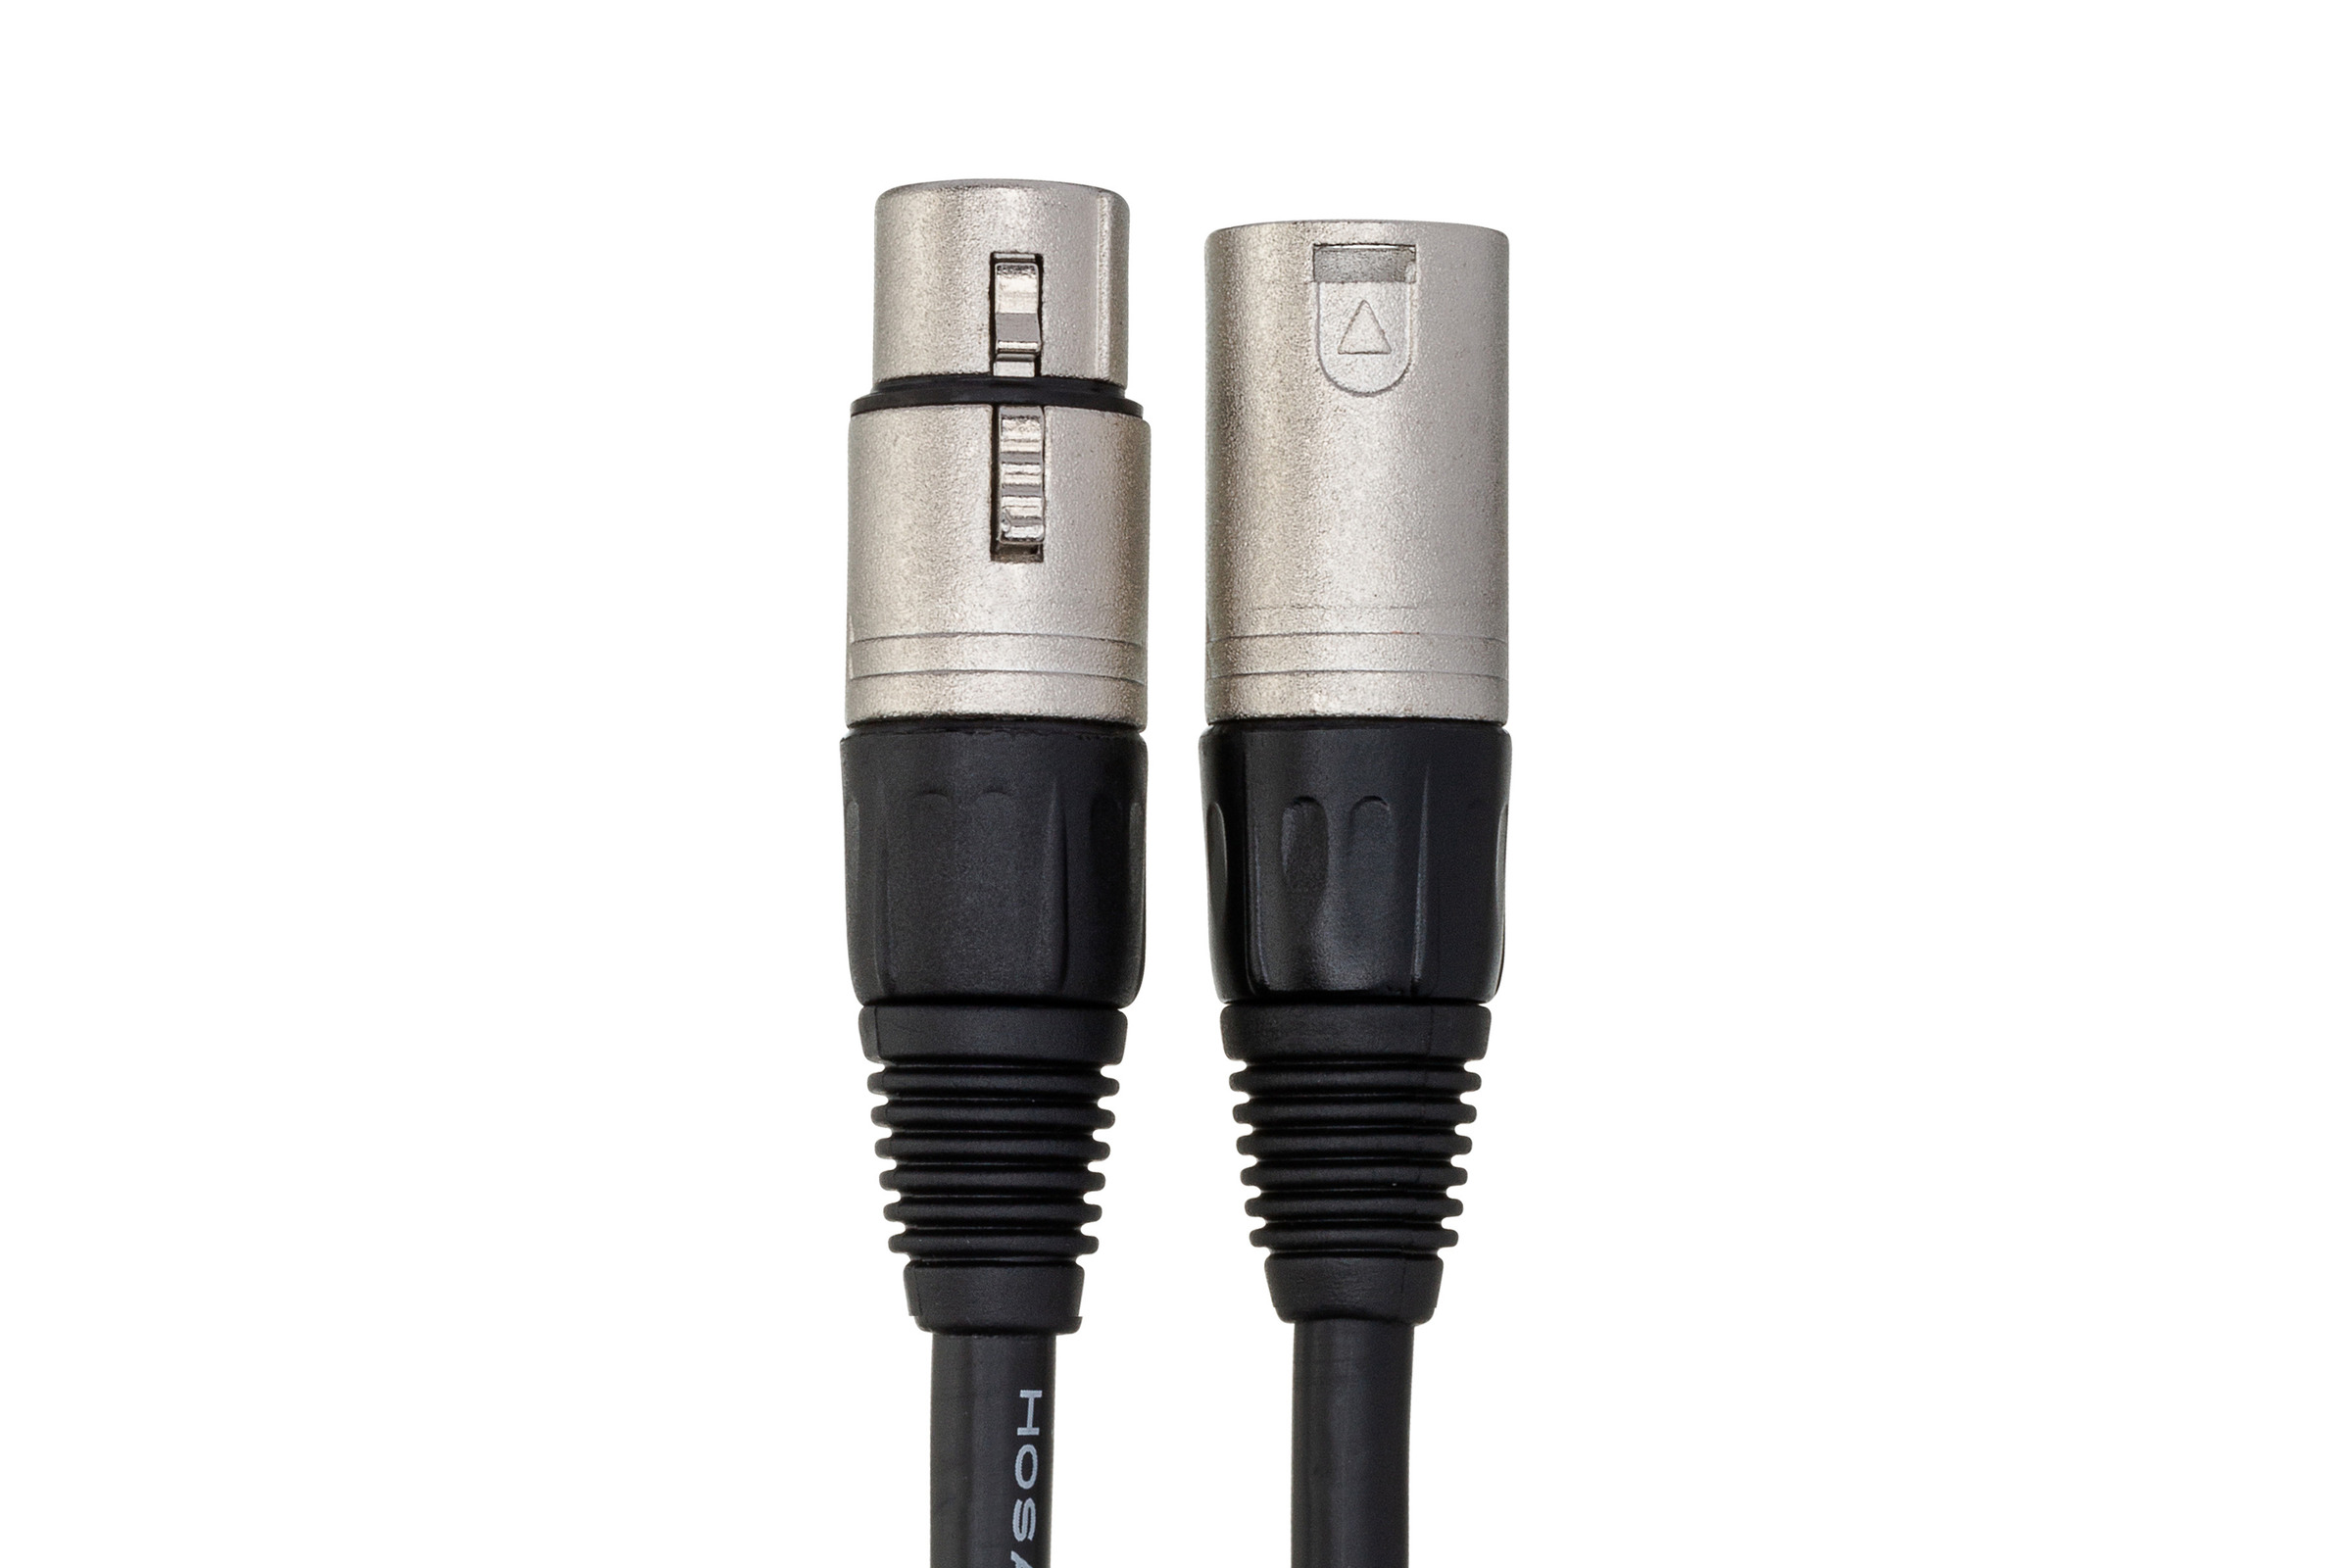 tarde junio Derivar DMX512 Cable - DMX Cables & Adapters - Data Cables | Hosa Cables